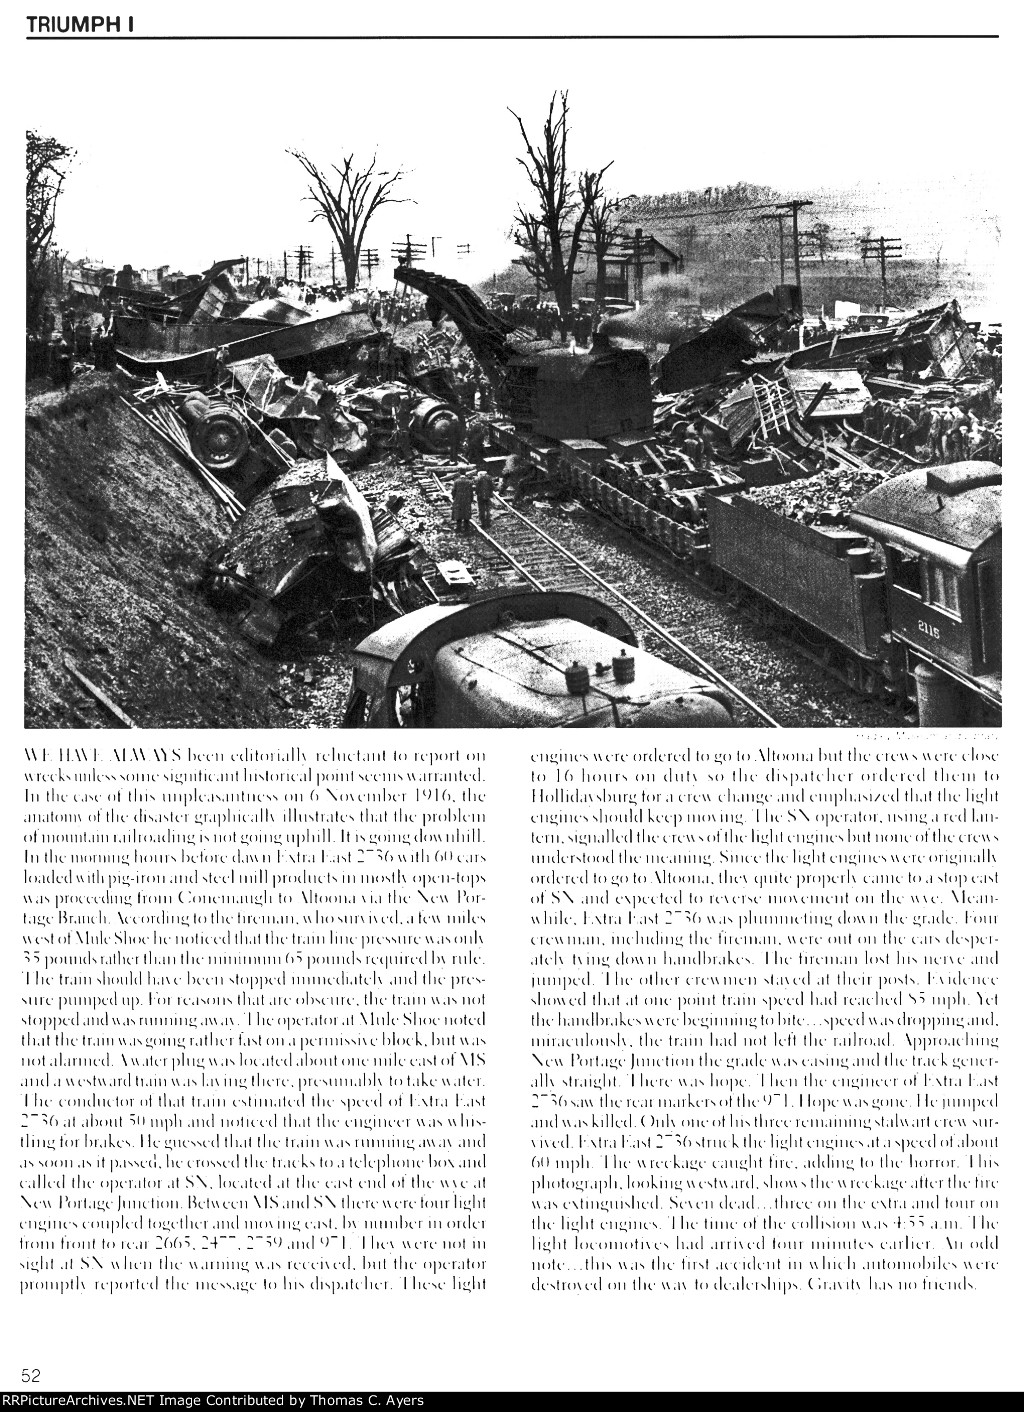 "Allegheny Portage Railroad," Page 52, 1997